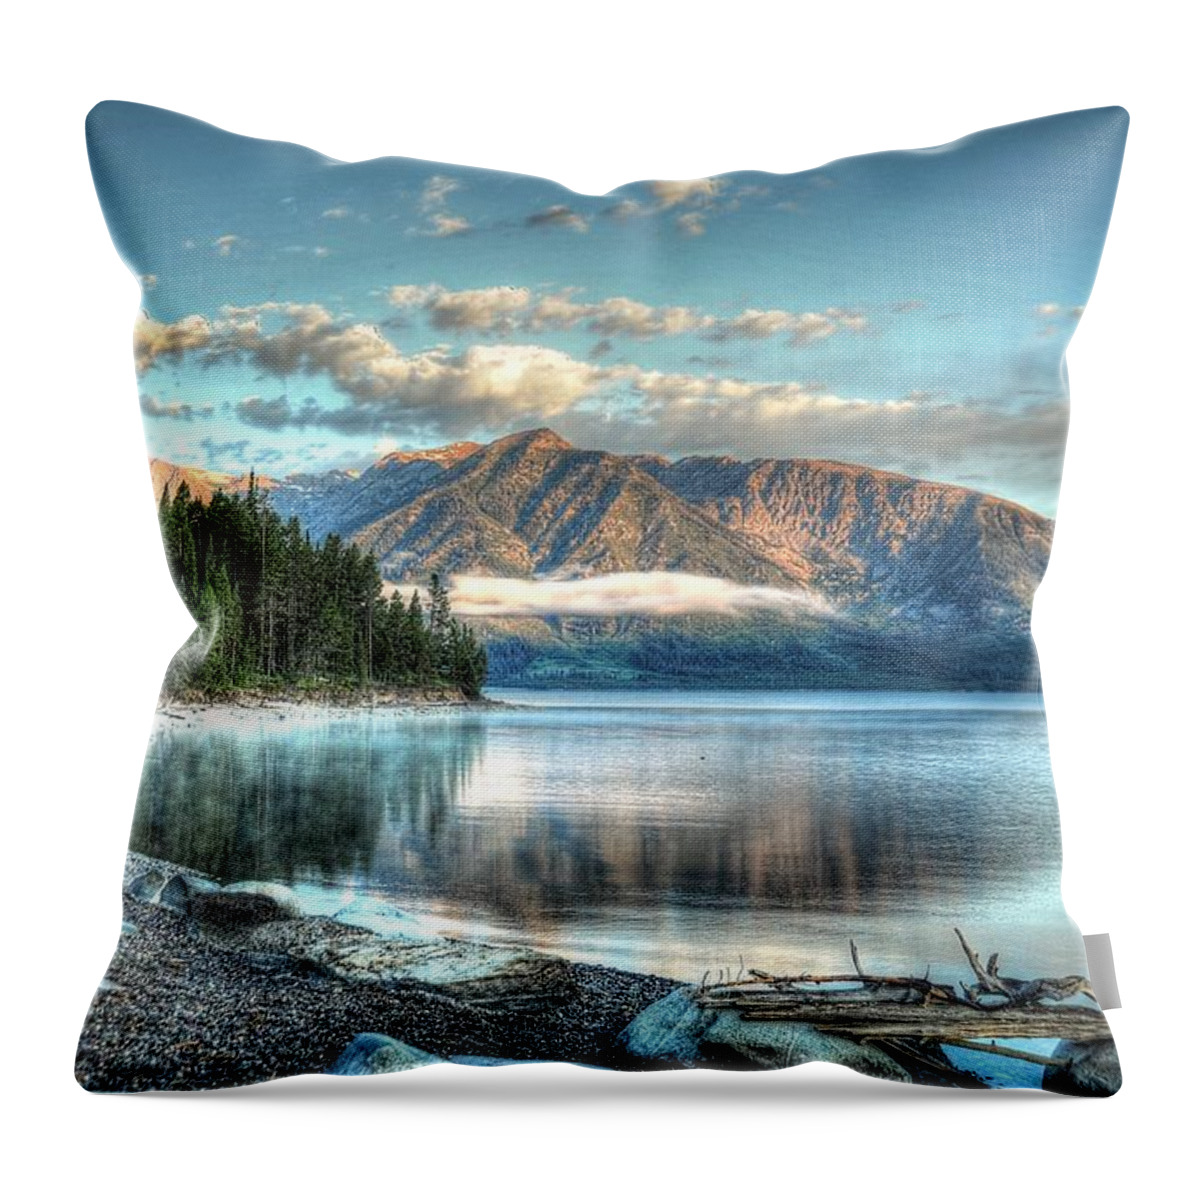 Photograph Throw Pillow featuring the photograph Jackson Lake by Richard Gehlbach